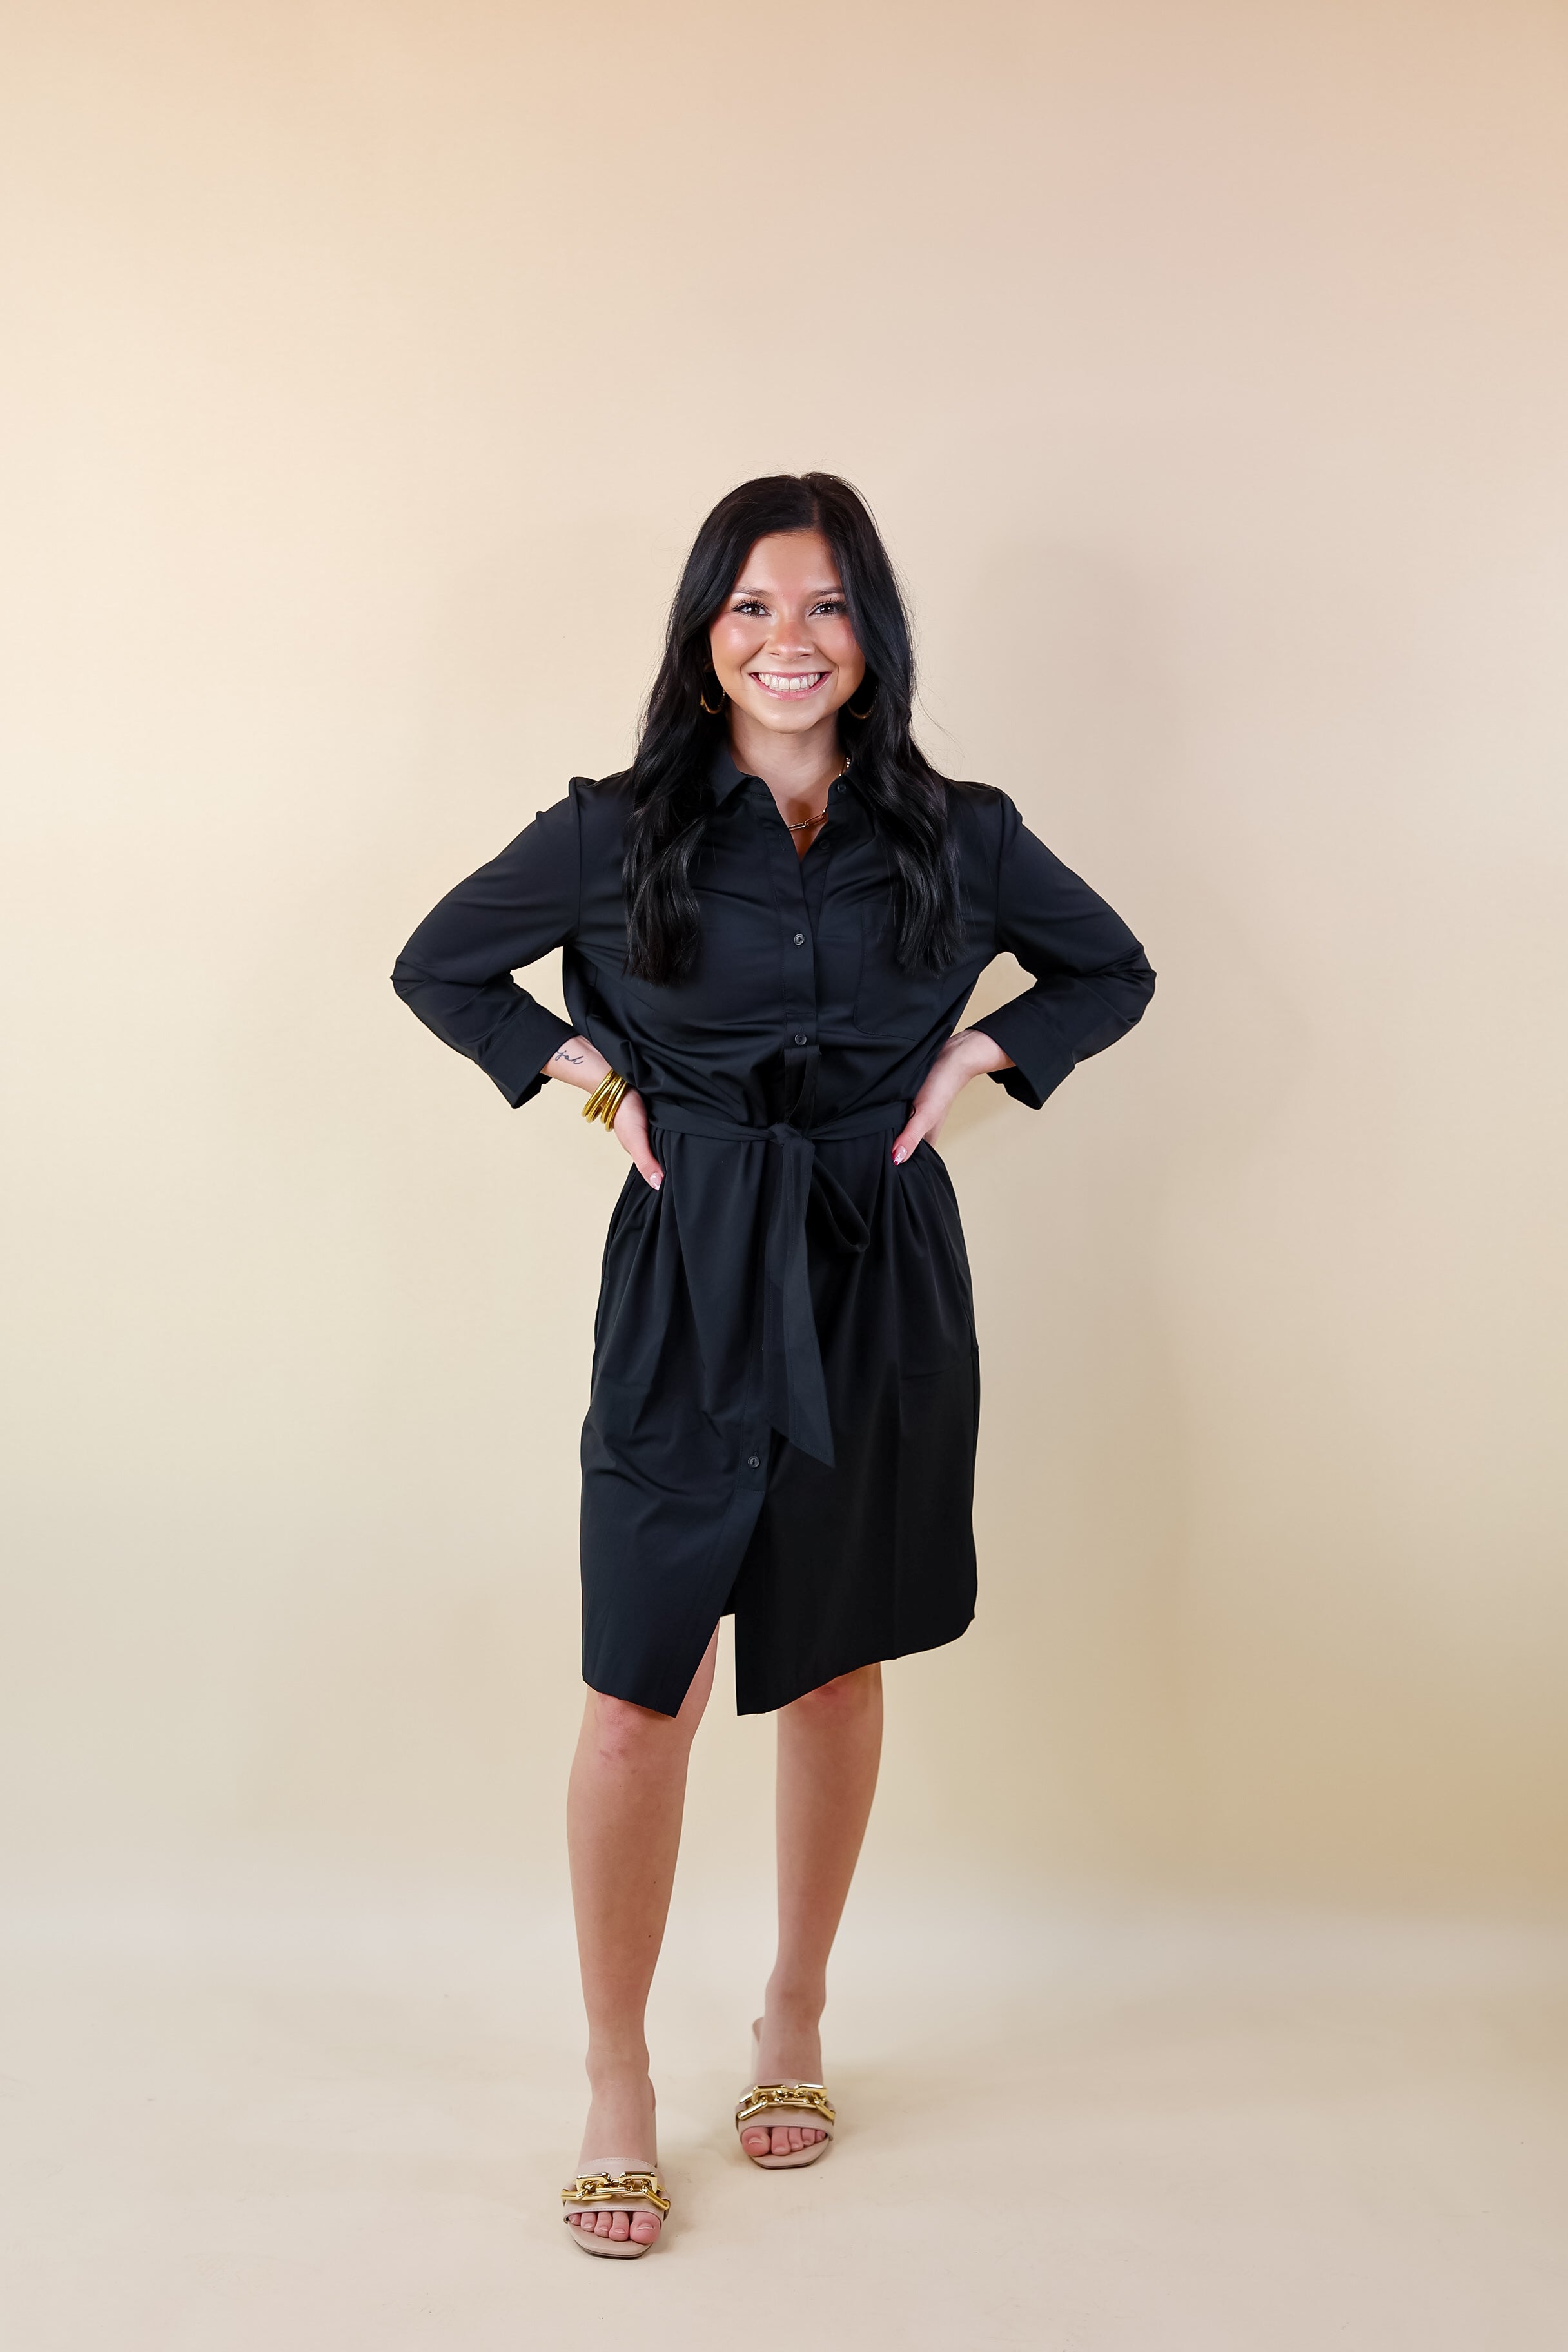 Lyssé | Schiffer Button Down Dress Dress in Black - Giddy Up Glamour Boutique